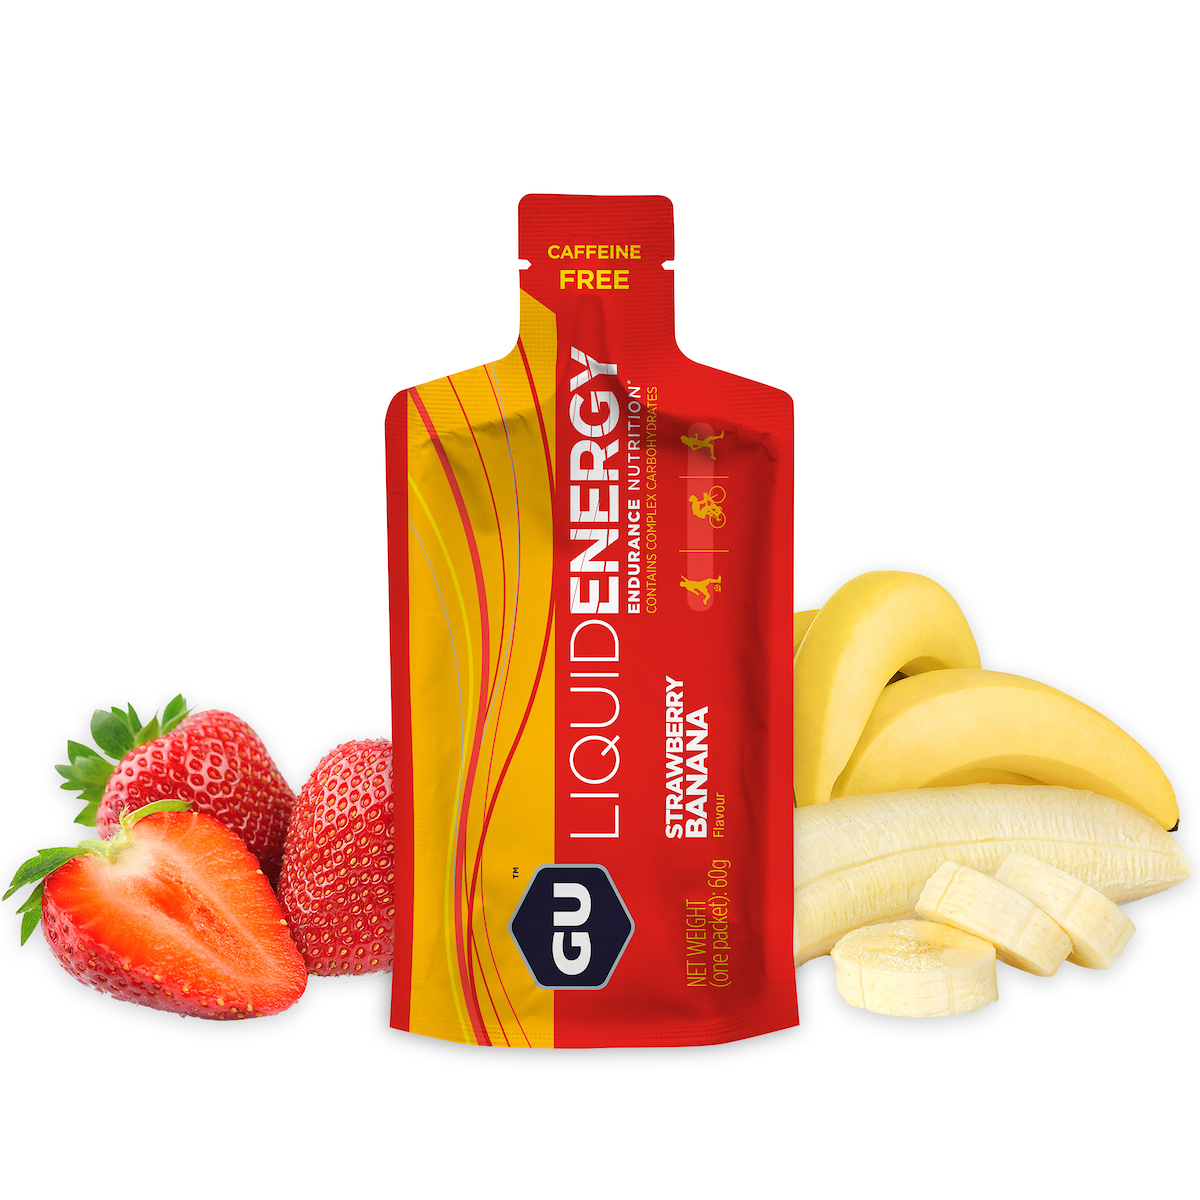 GU Liquid Energy Gel 12 x 60 Gramm MHD 29.09.2023 Strawberry Banana Erdbeere Banane